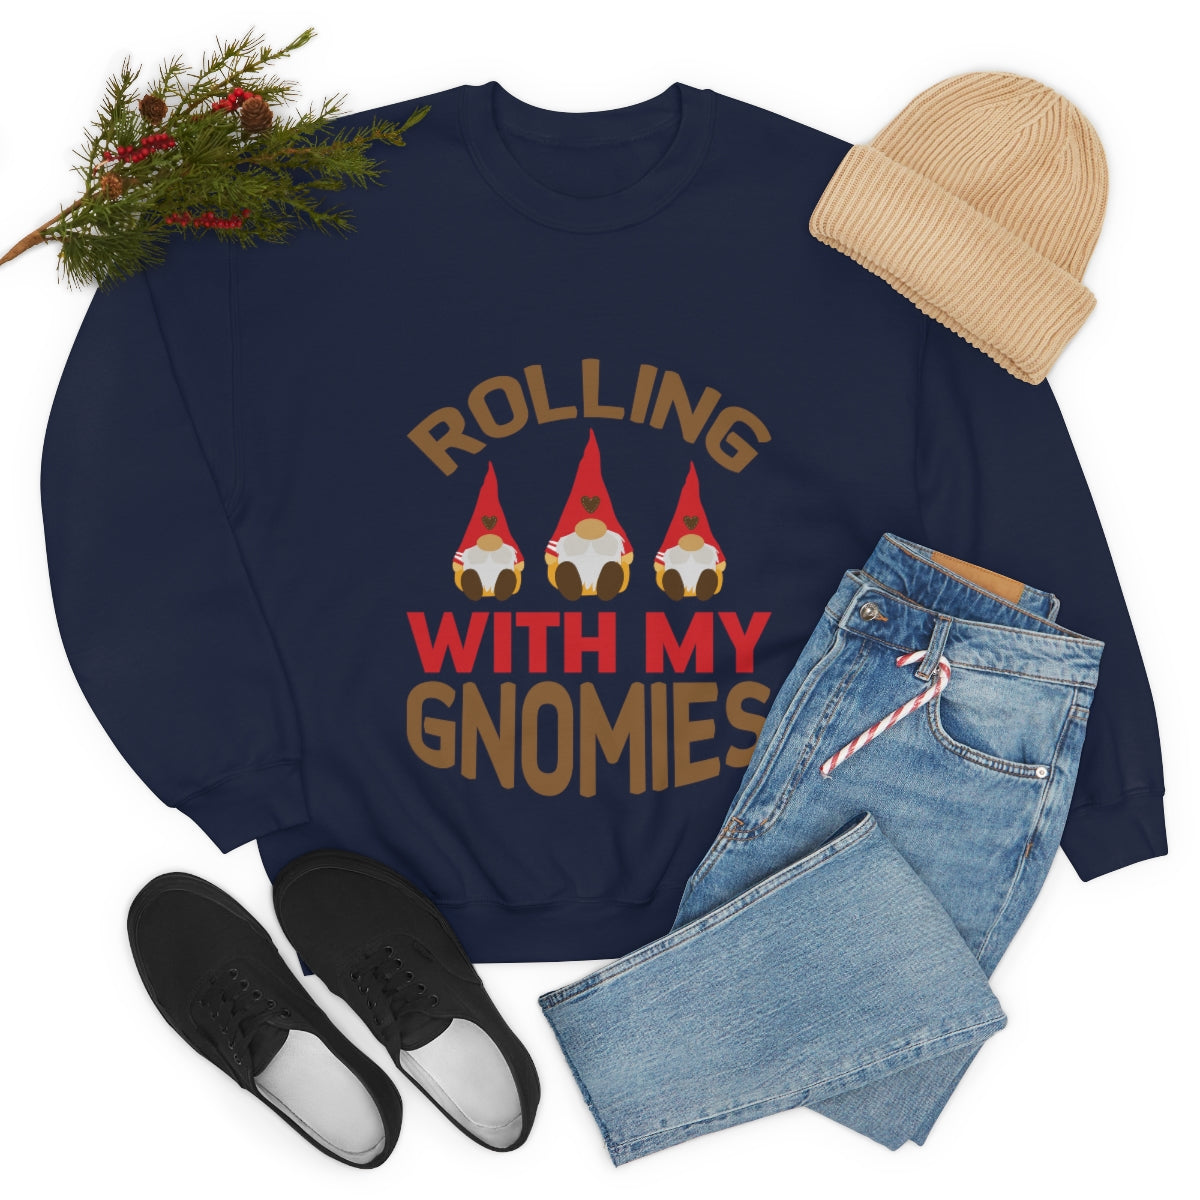 Merry Christmas Unisex Sweatshirts , Sweatshirt , Women Sweatshirt , Men Sweatshirt ,Crewneck Sweatshirt, Rolling with my Gnomies Printify